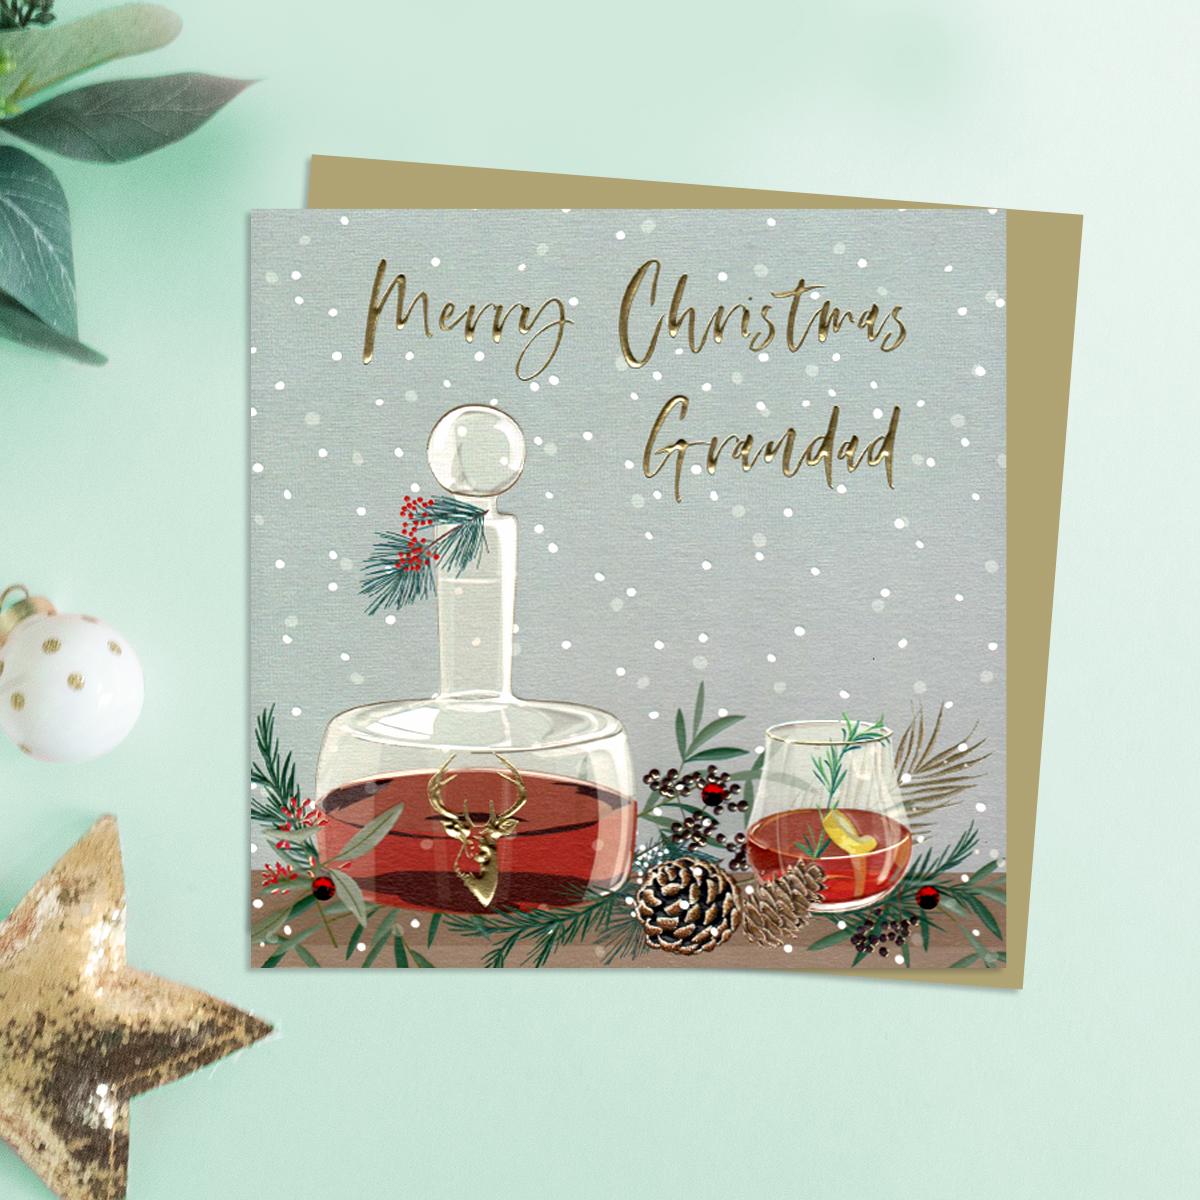 Grandad Decanter Christmas Card Alongside Its Gold Envelope